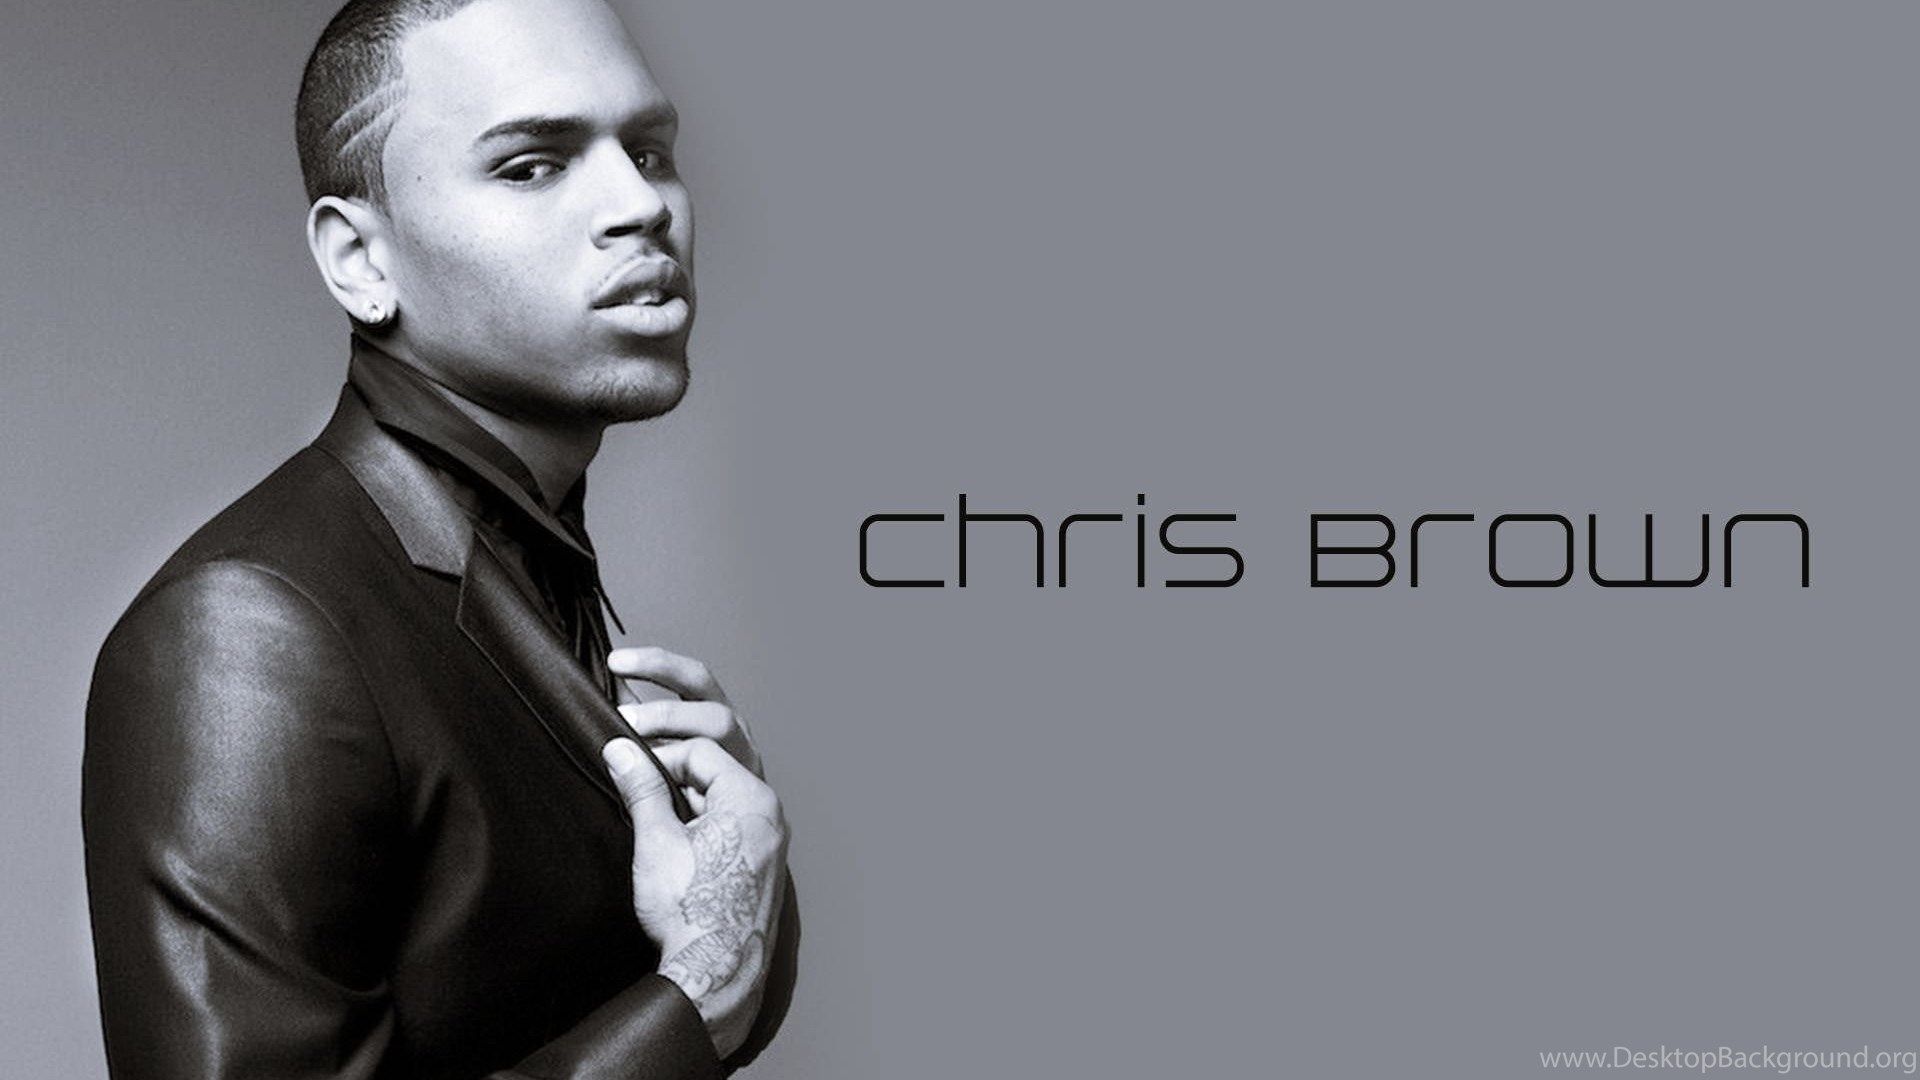 Chris Brown 2015 Tumblr Wallpaper. Desktop Background